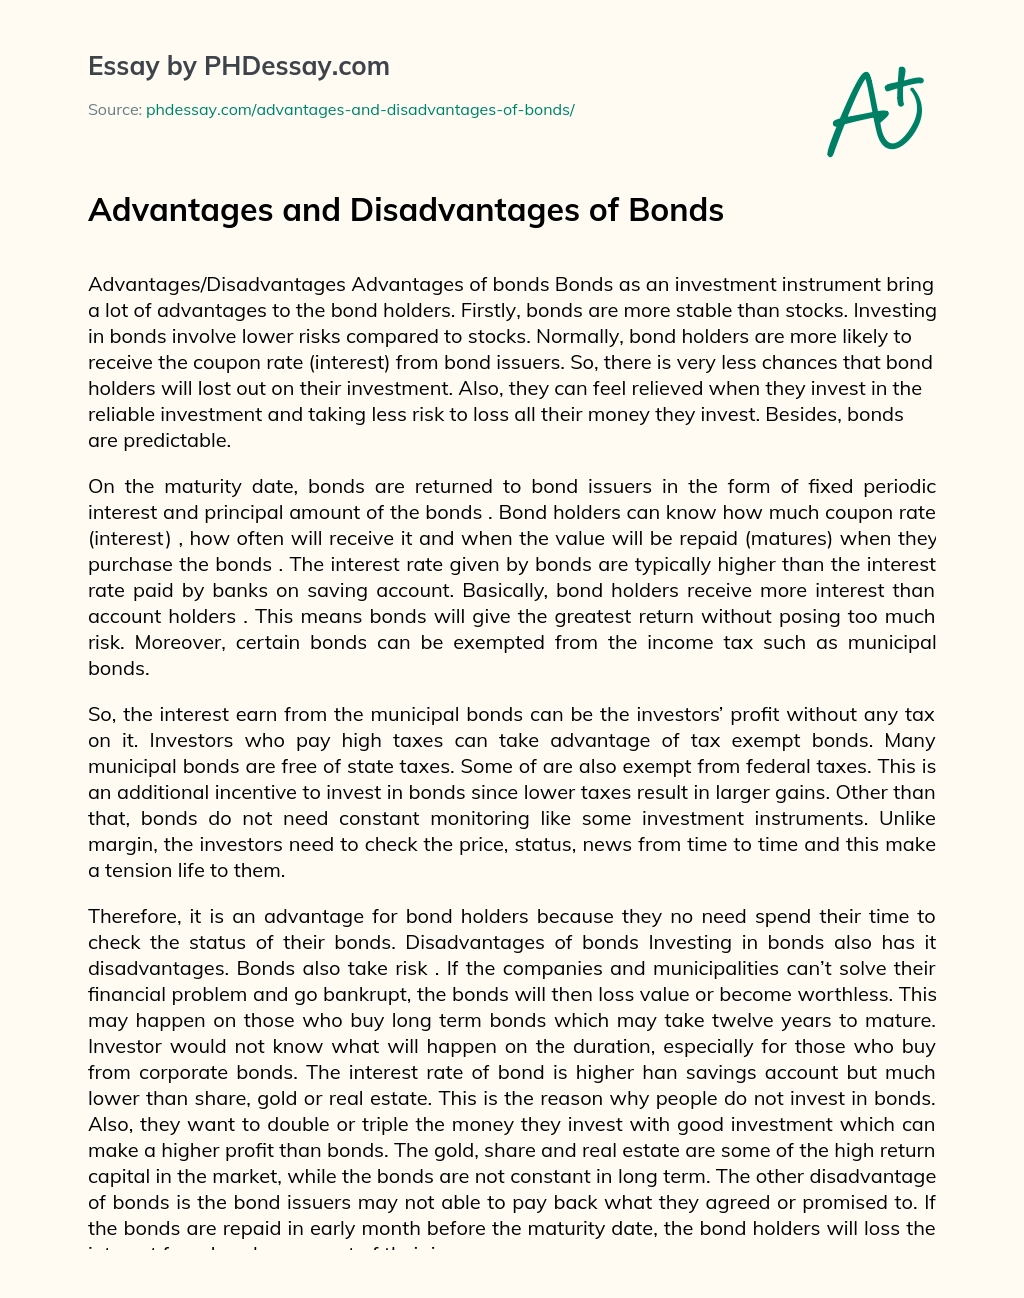 Advantages and Disadvantages of Bonds essay